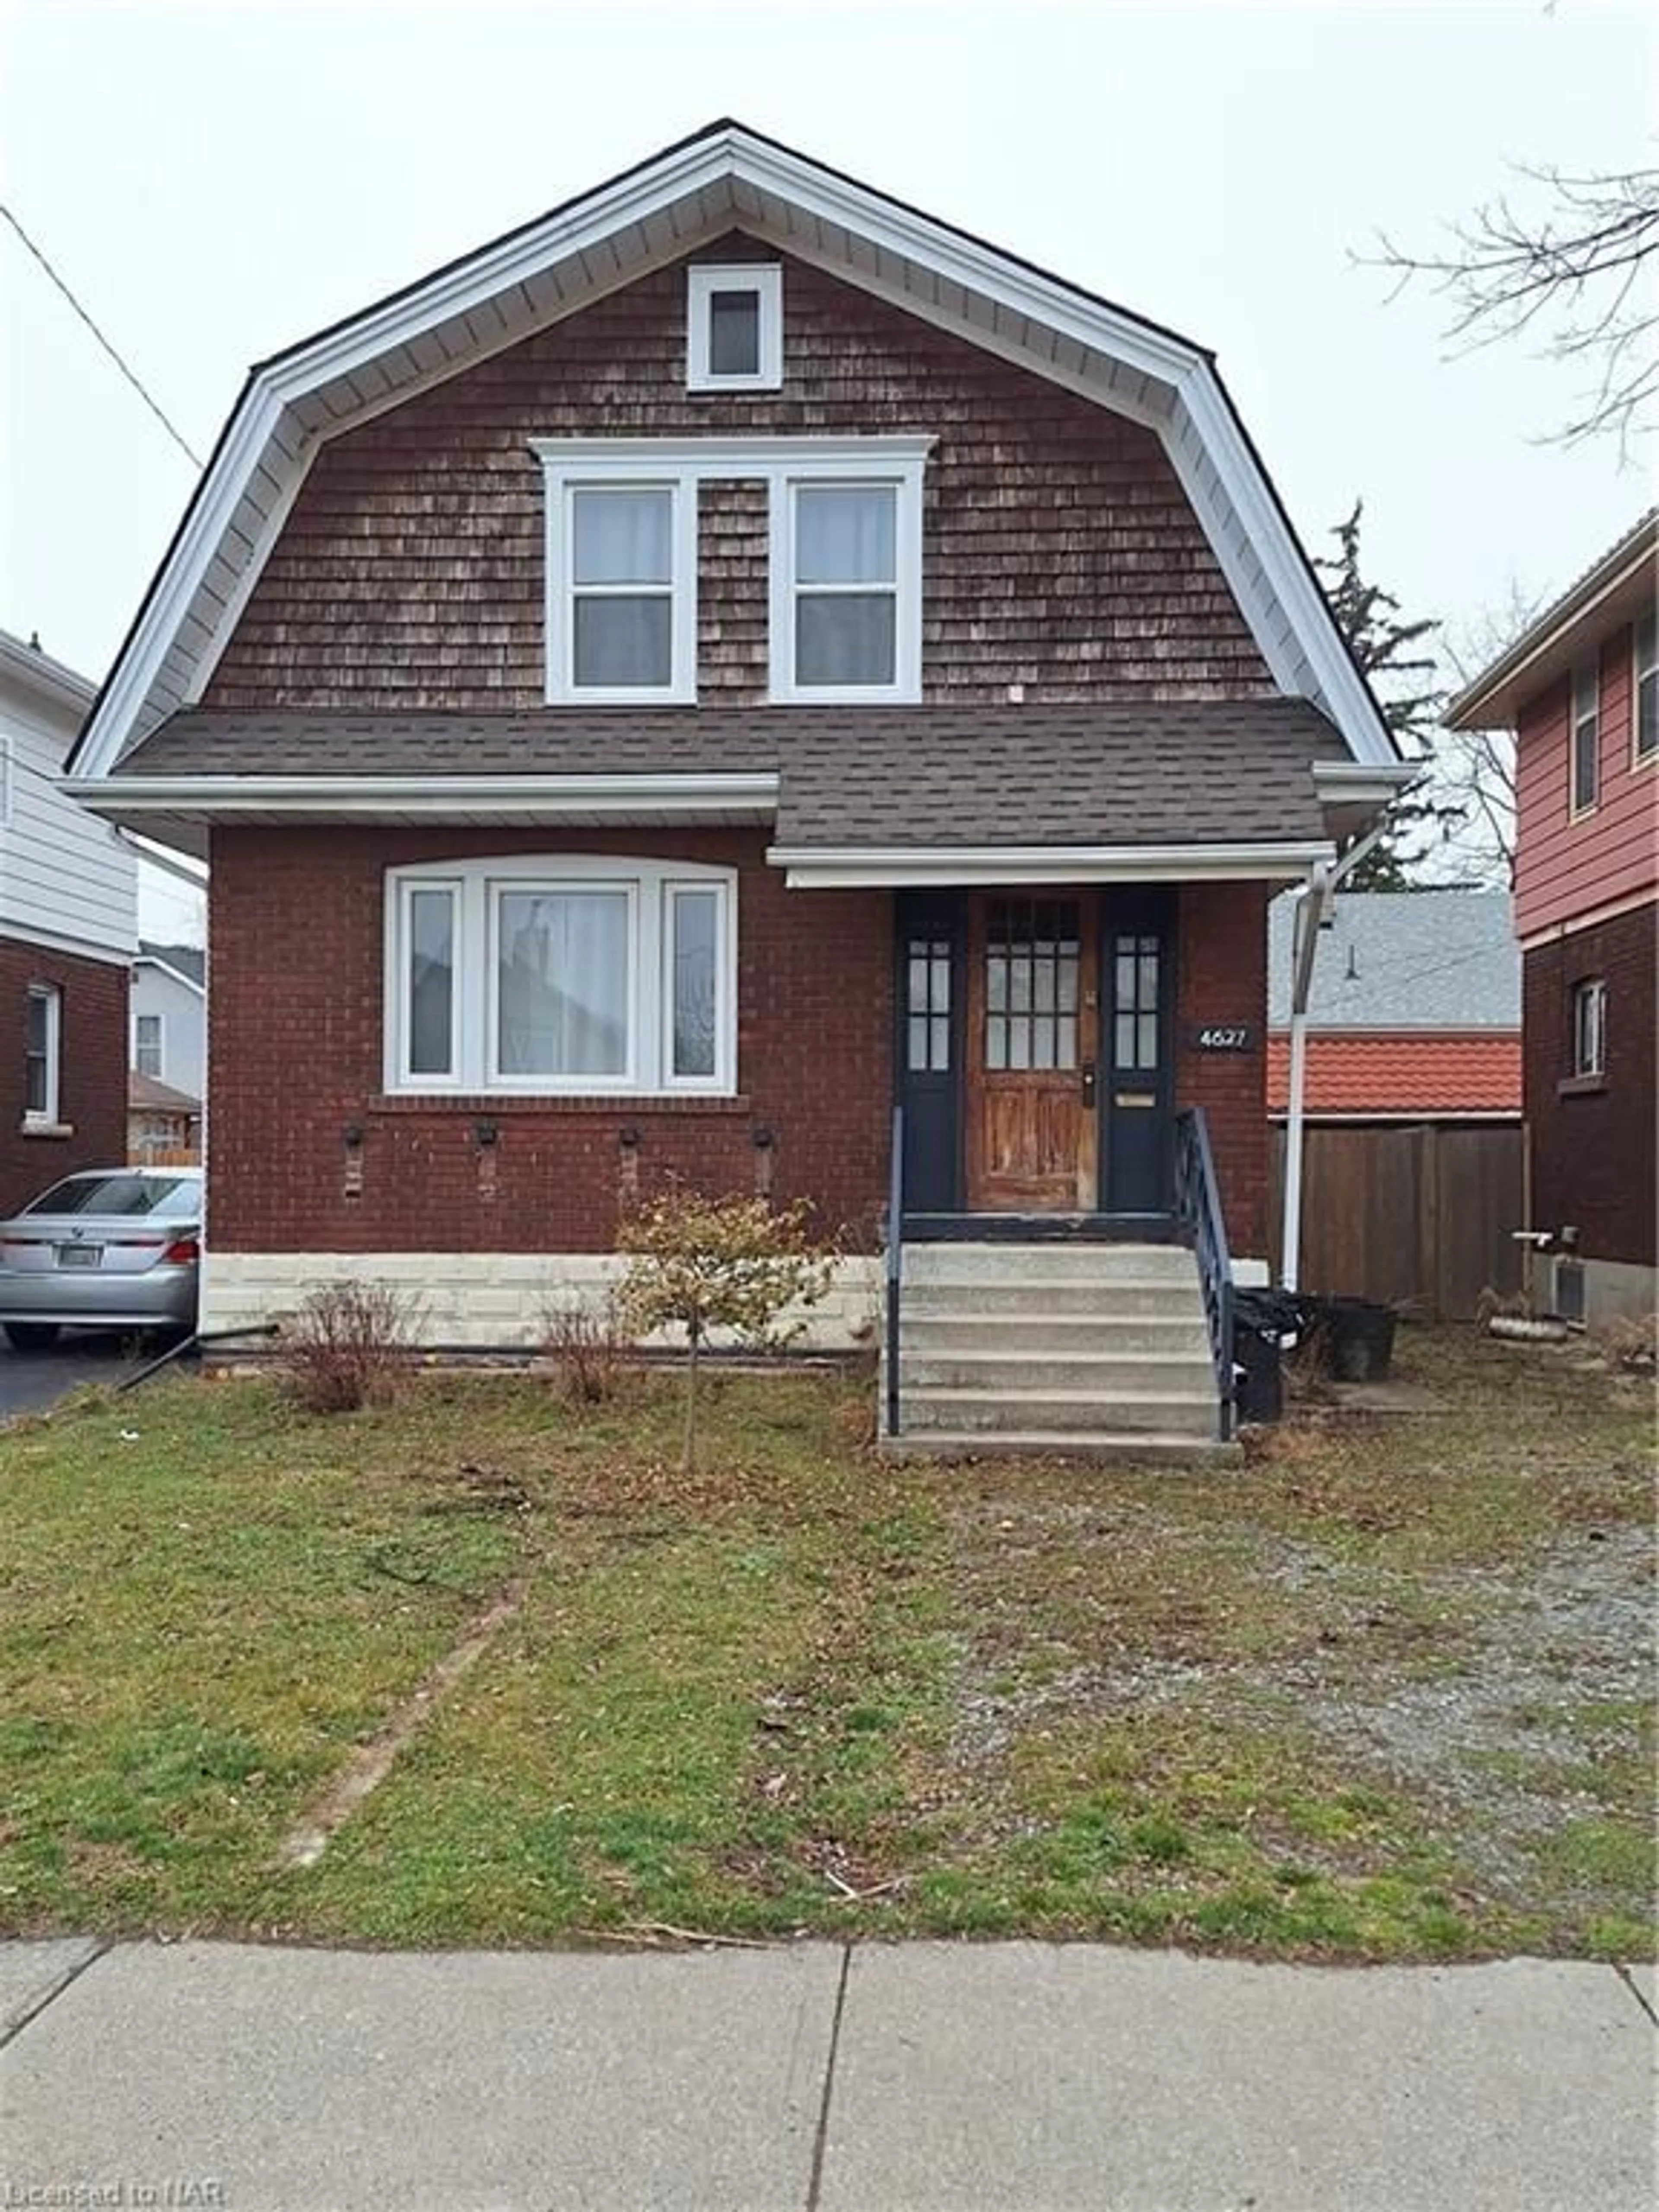 Frontside or backside of a home for 4627 Simcoe St, Niagara Falls Ontario L2E 1V4